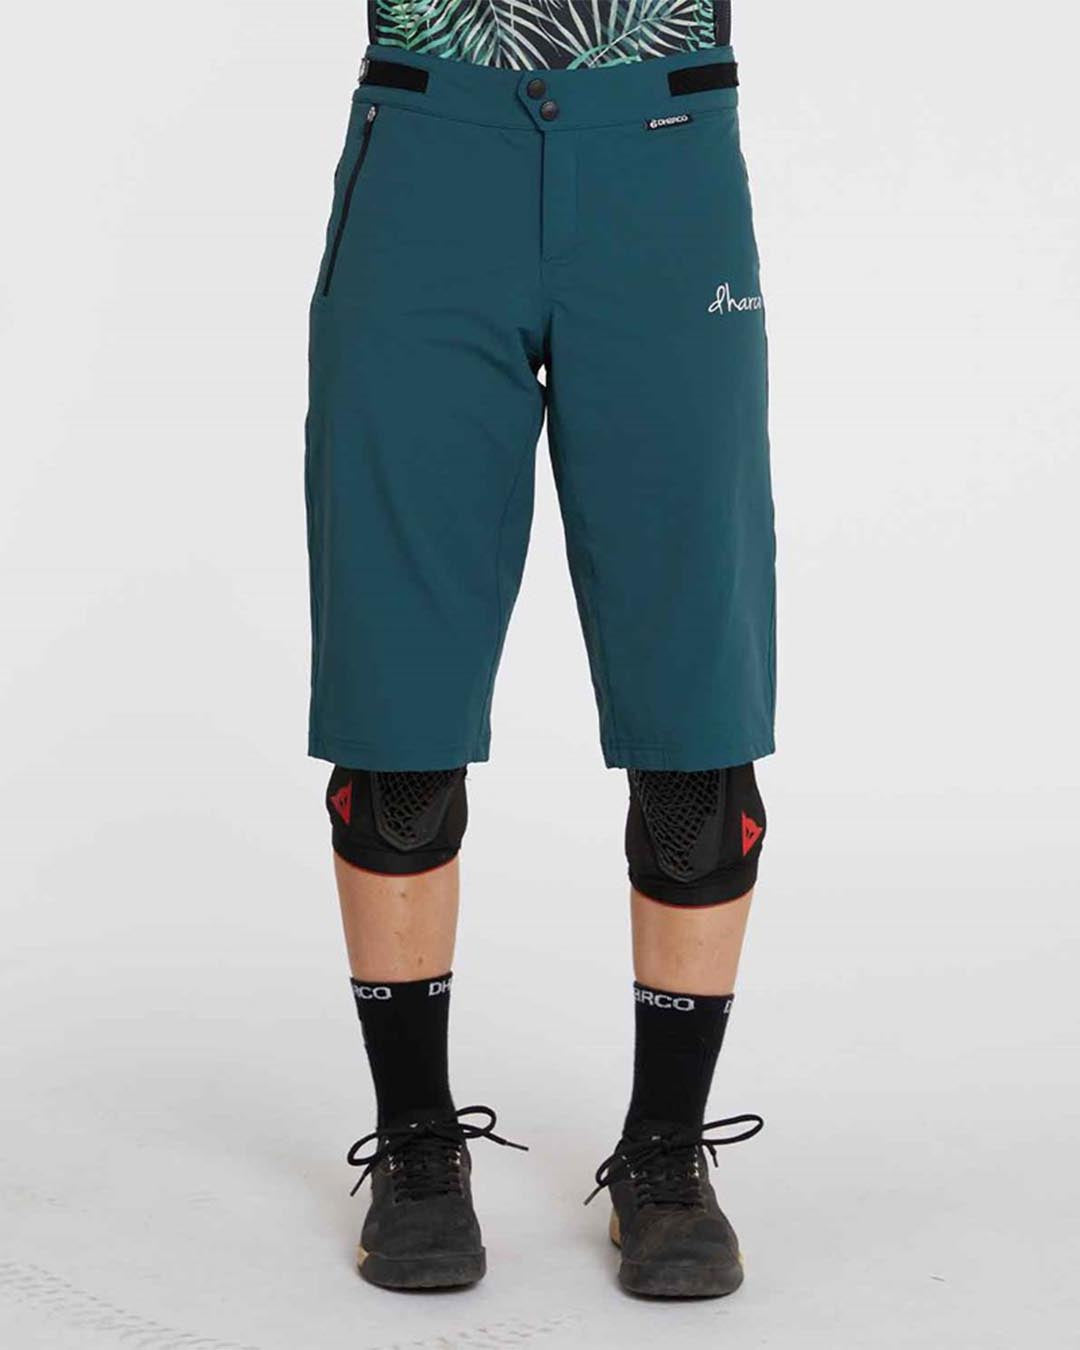 MT500 Mountain Trekking Shorts - Navy Blue - Women